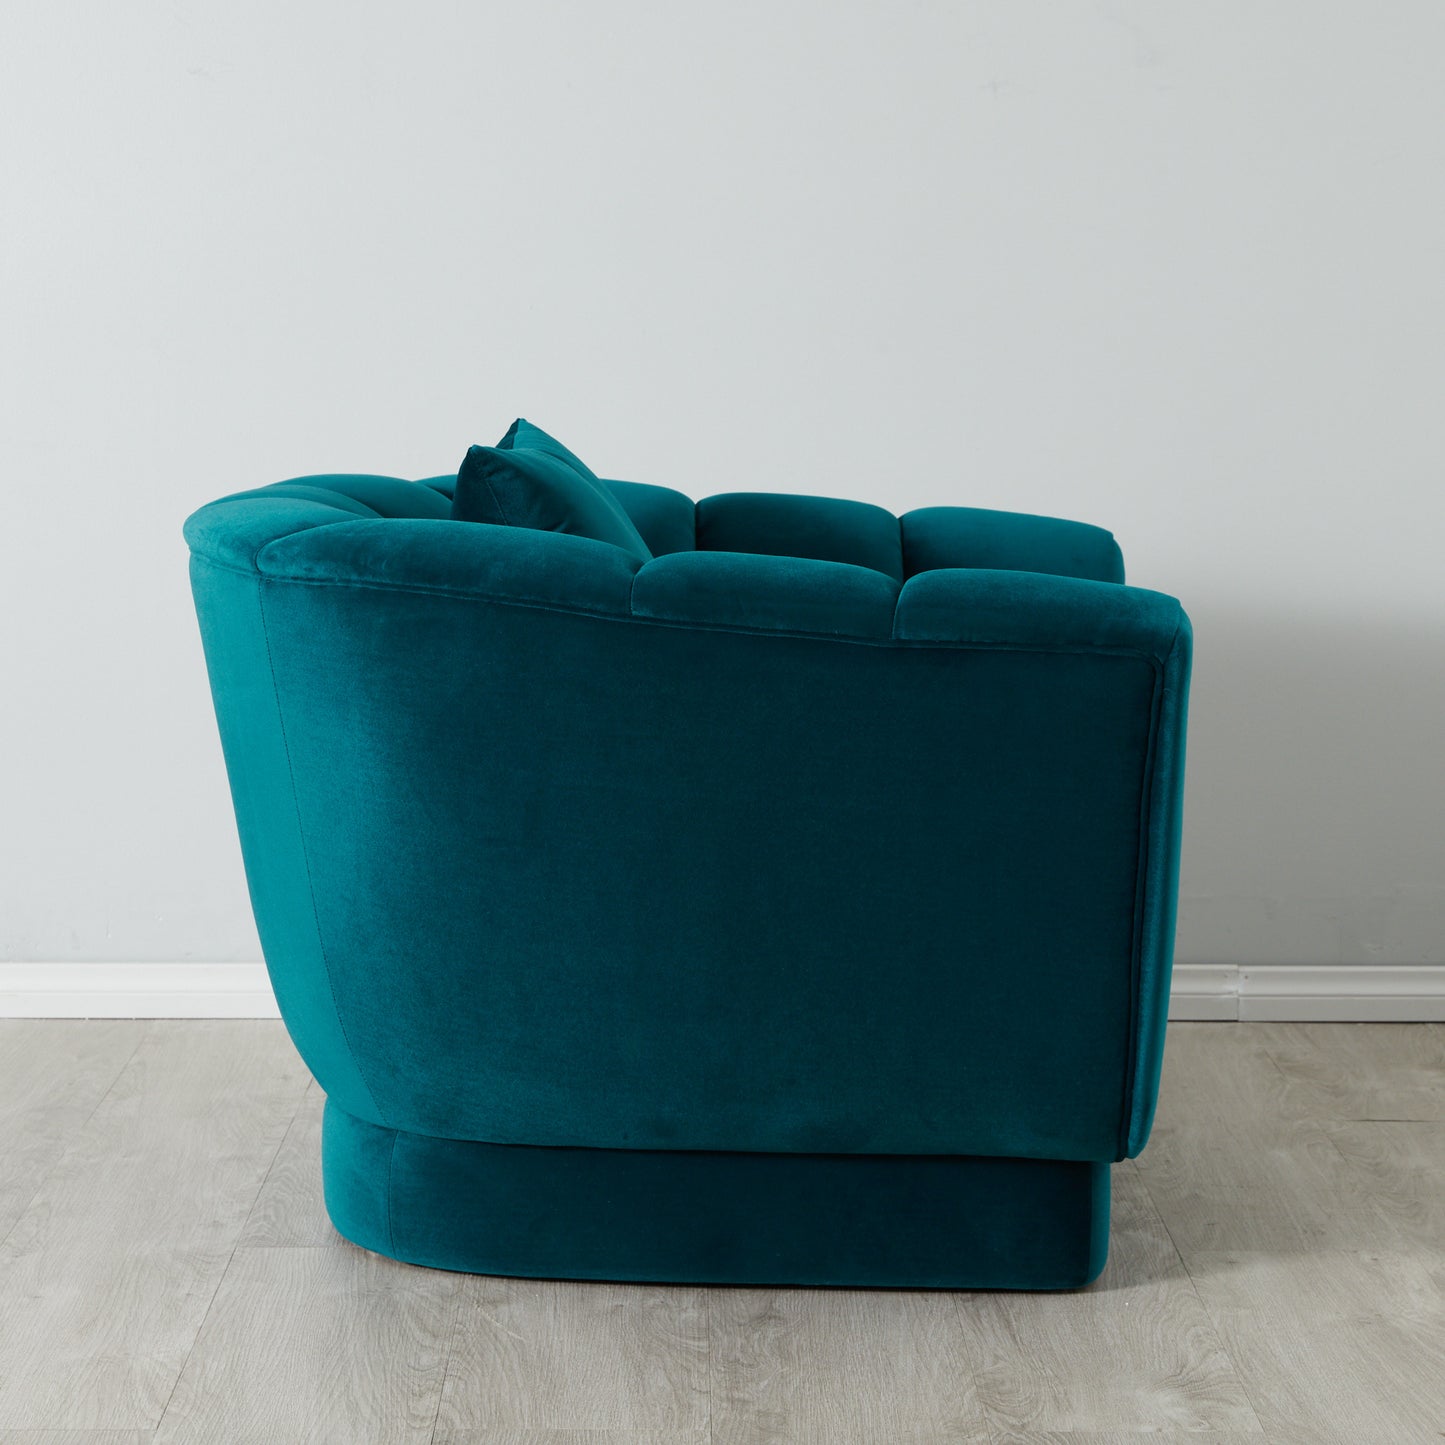 Fransesca Green Lounge Chair